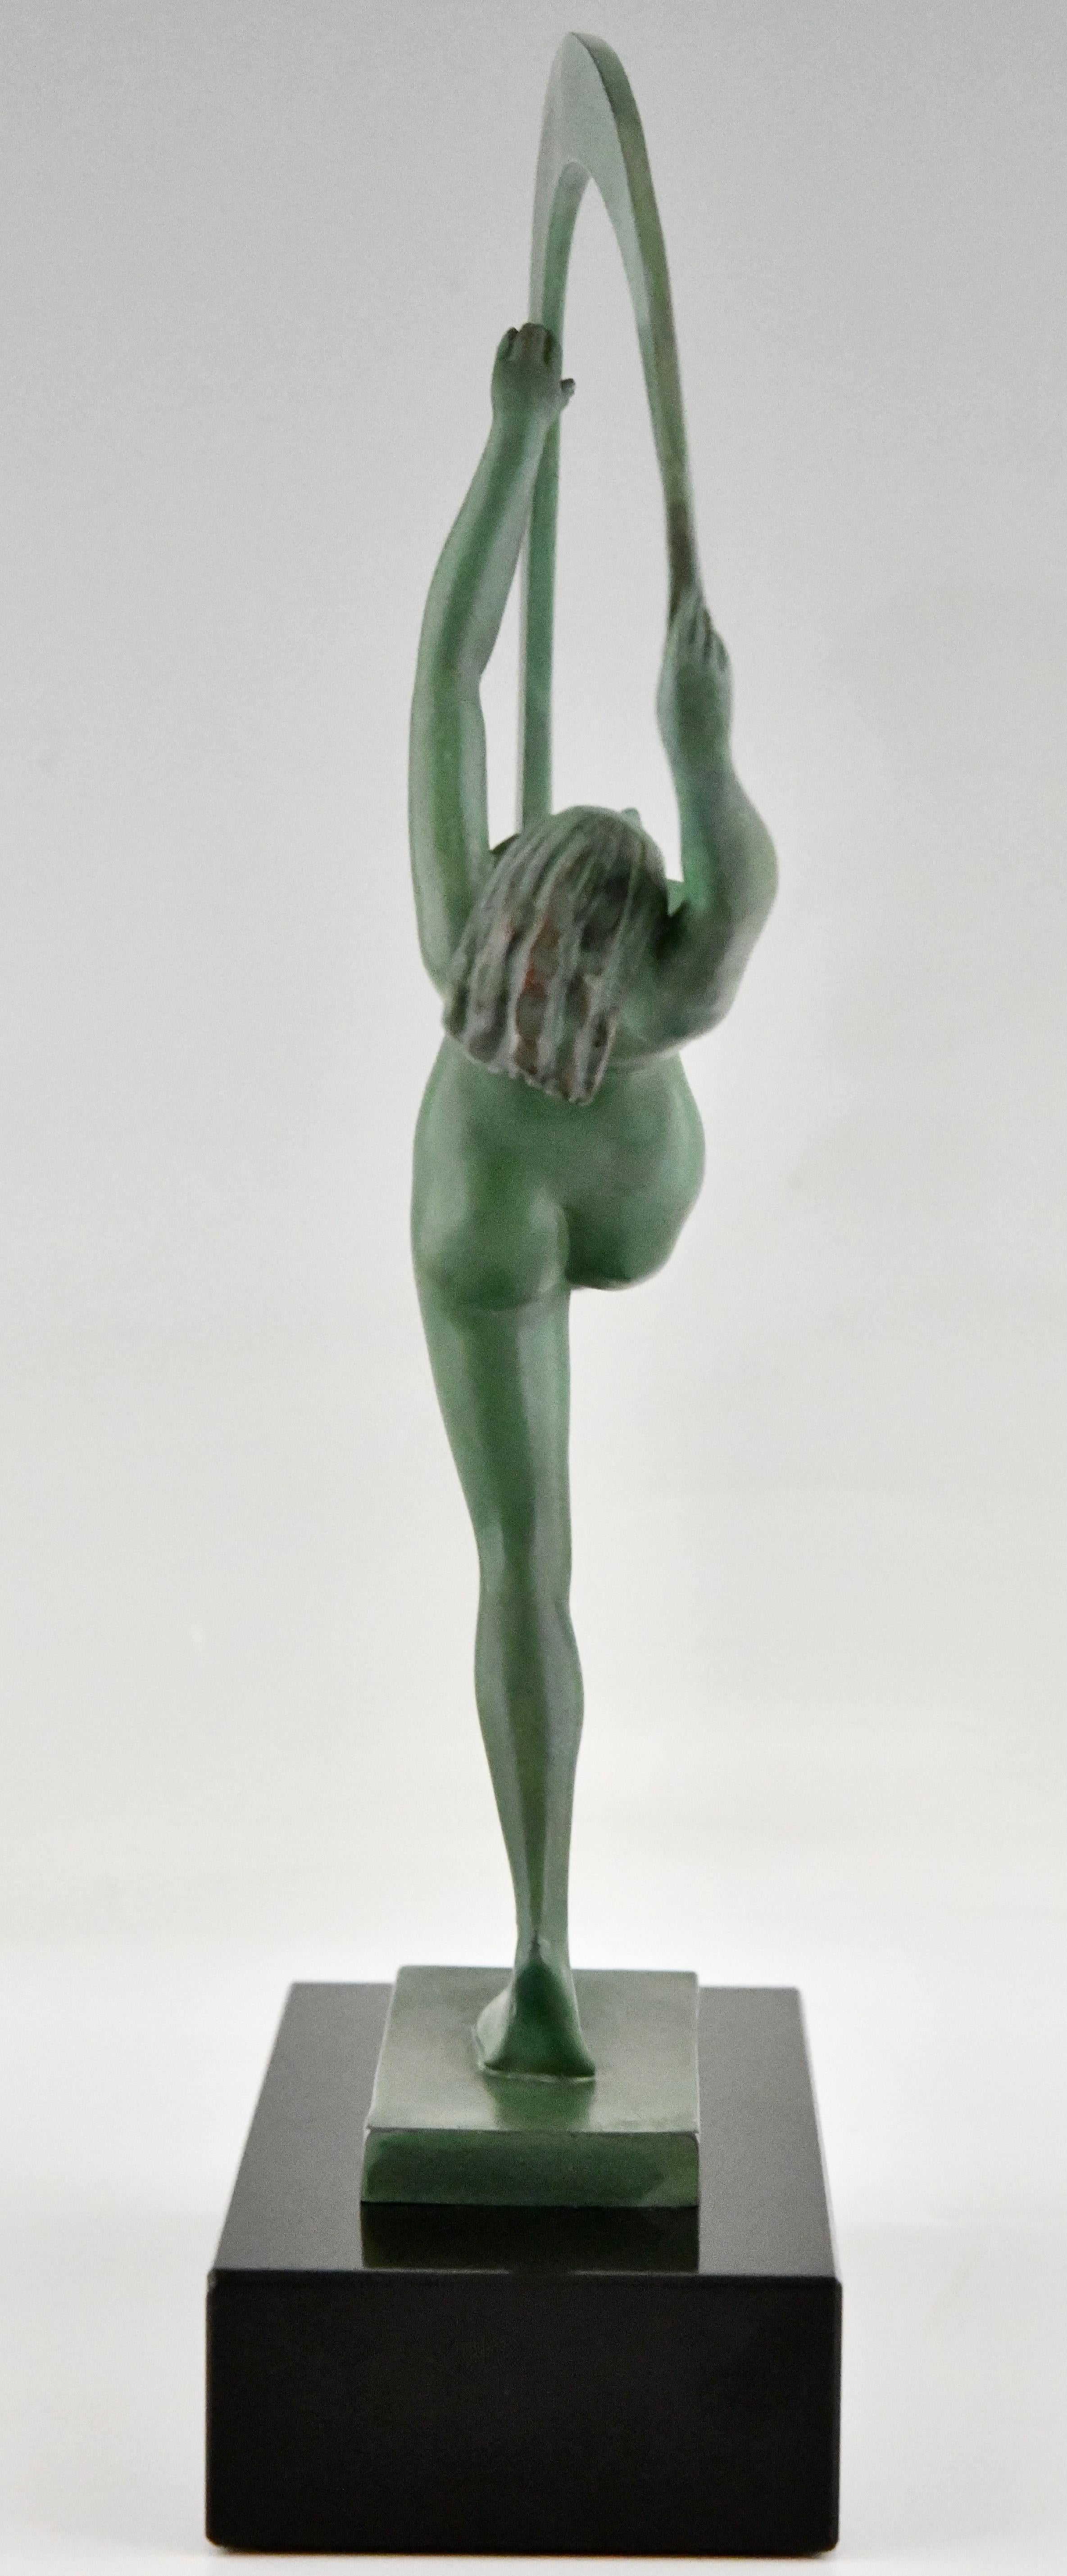 Metal Art Deco sculpture nude dancer with scarf Bacchanale by Janle for Max Le Verrier